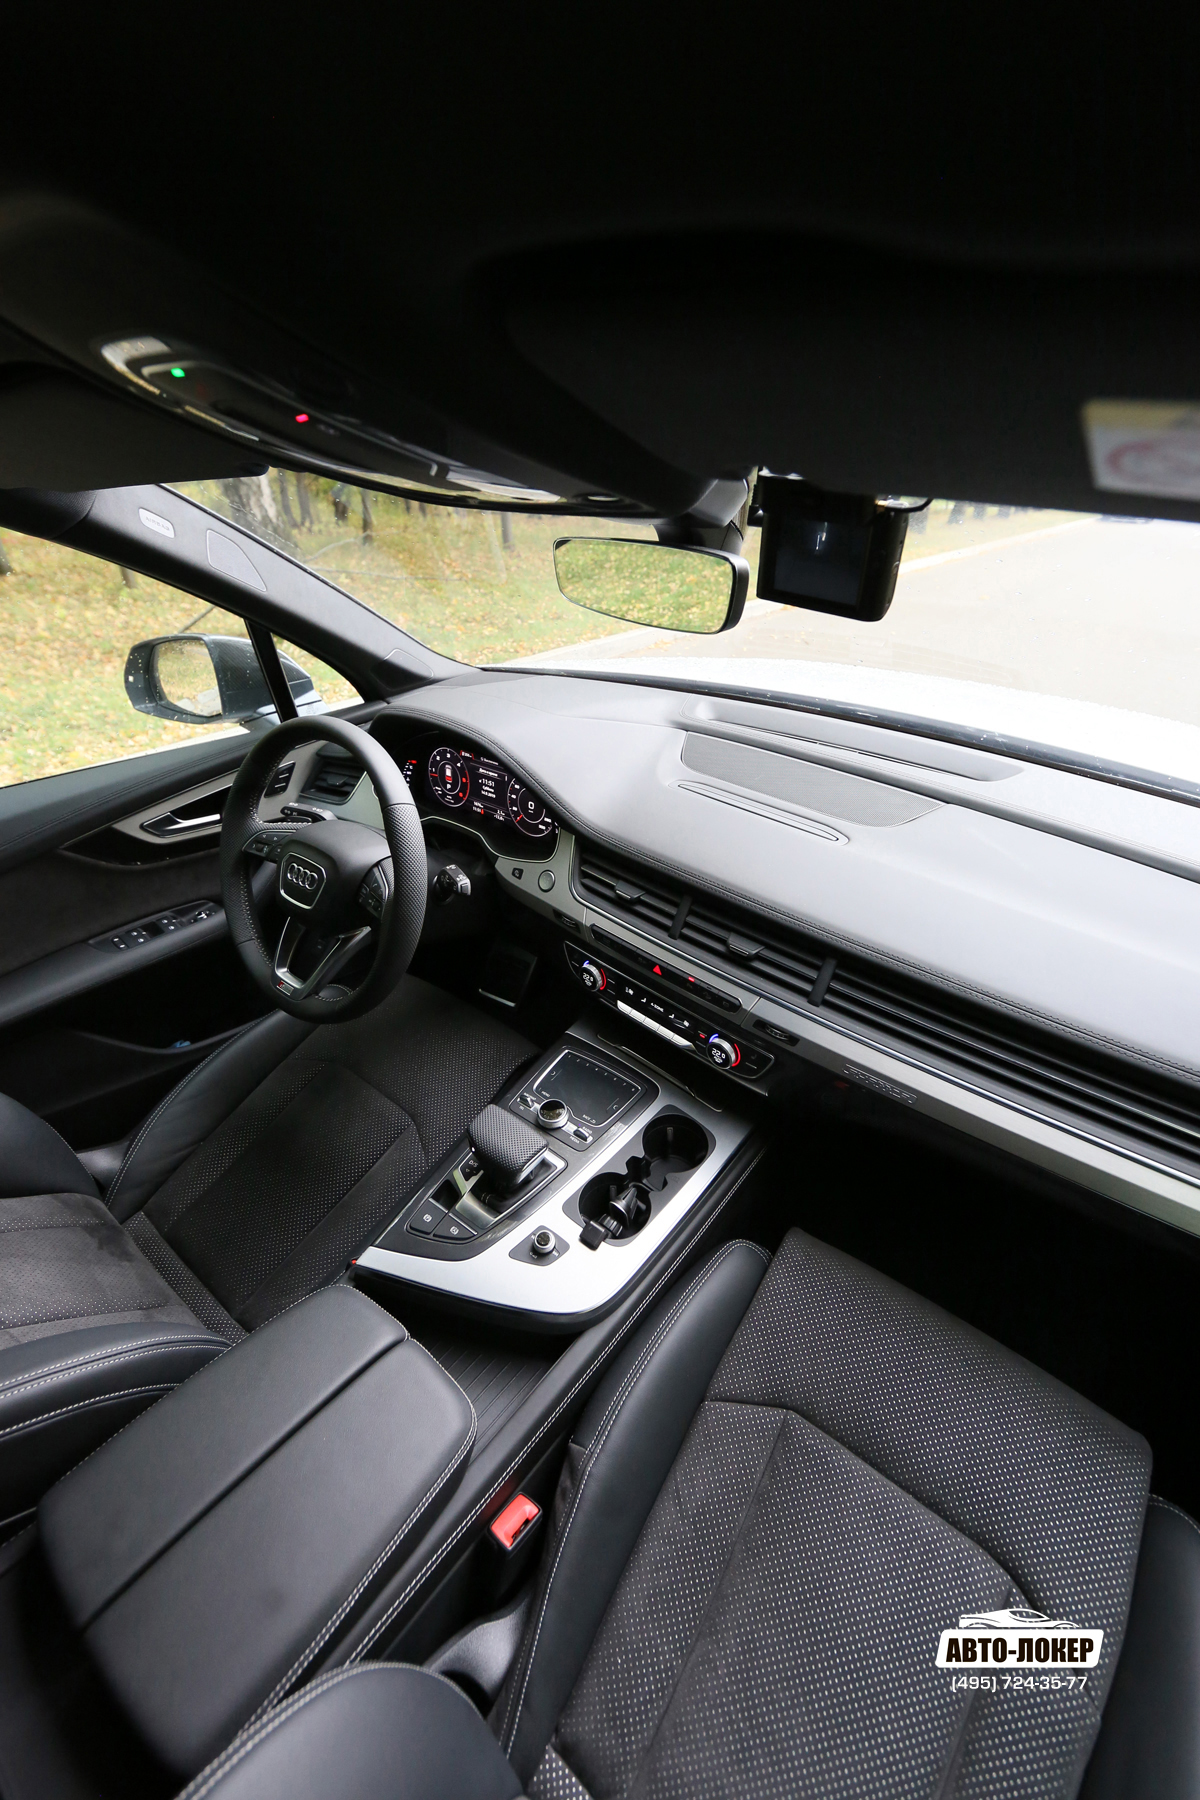 Перетяжка салона кожей Audi Q7  (Ауди Ку7)